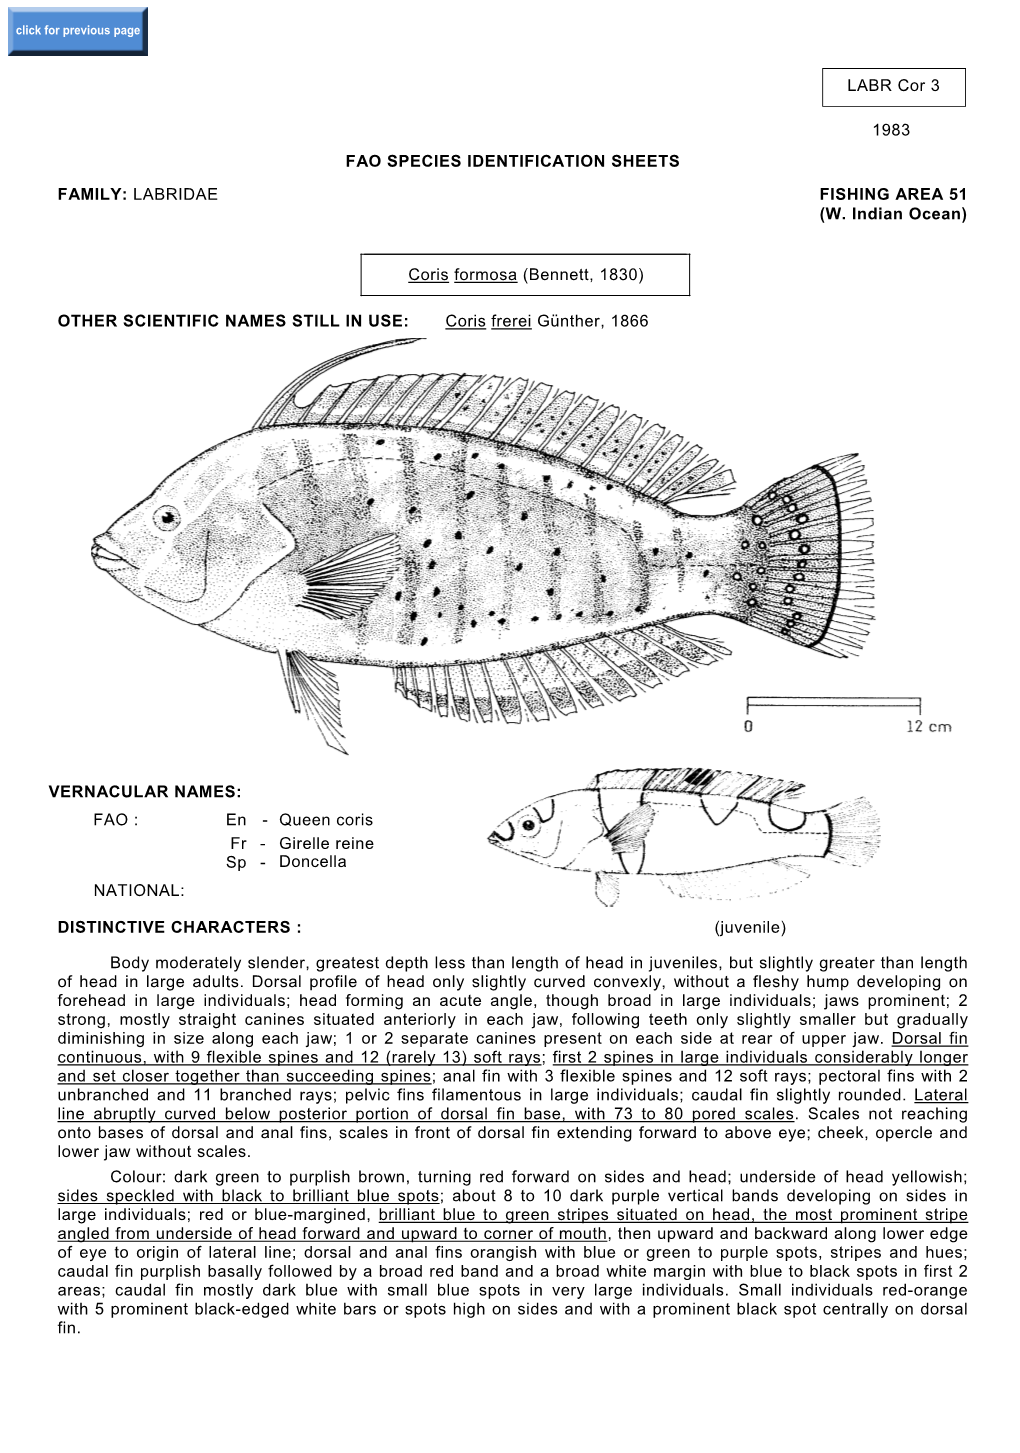 Labridae Fishing Area 51 (W